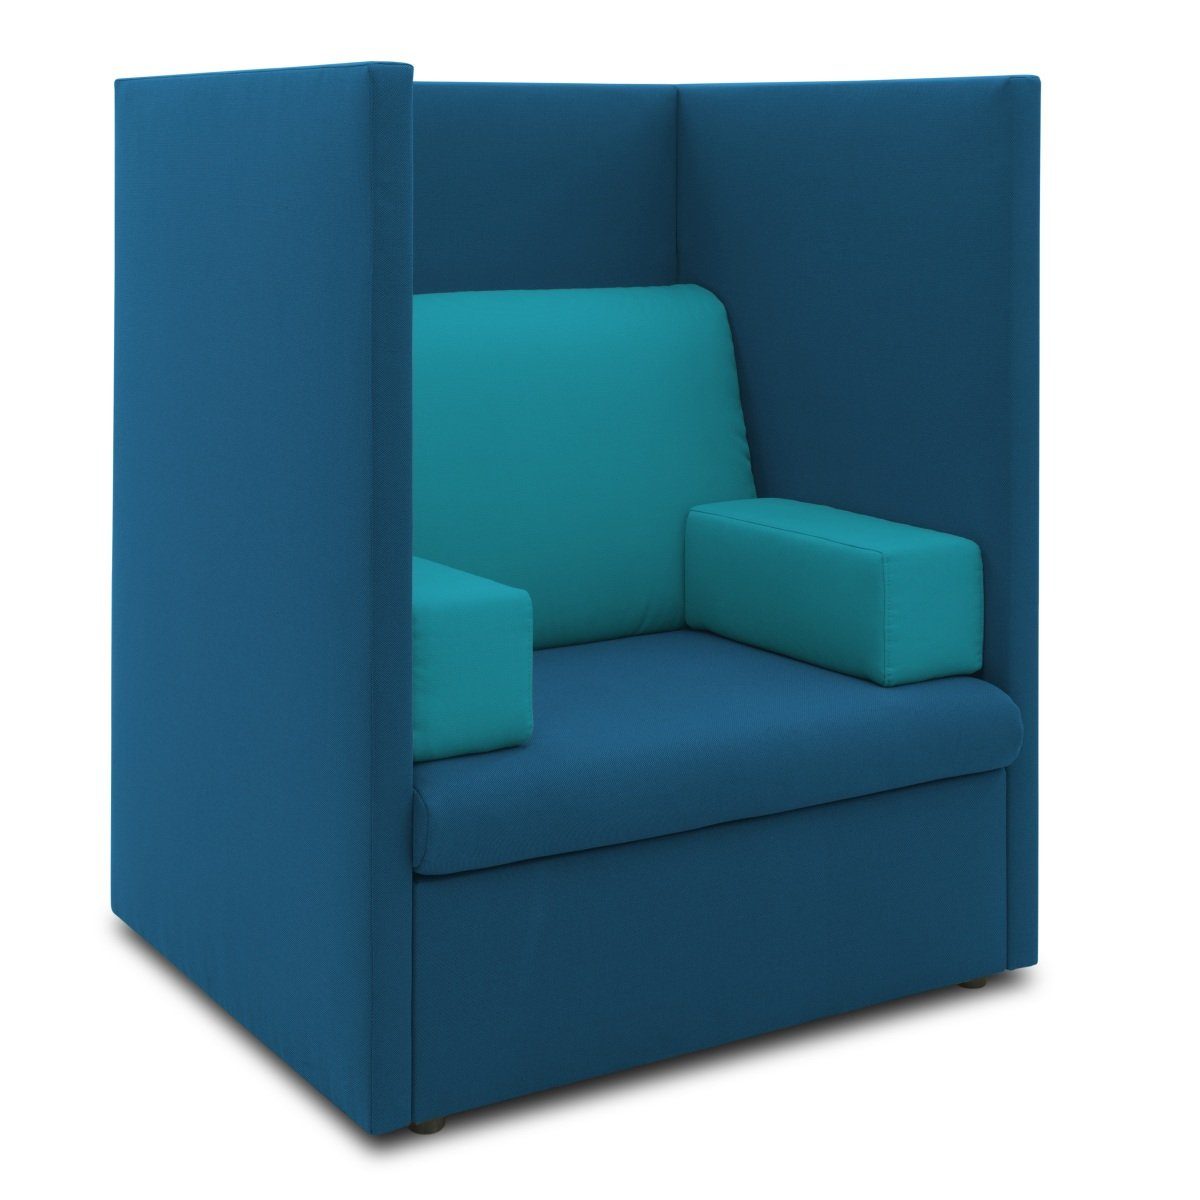 verkaufe gut Pickup-Möbel Sofa Outdoor Gartensofa Teile, 1 Einsitzer wetterfest Sessel wetterfest Sylt